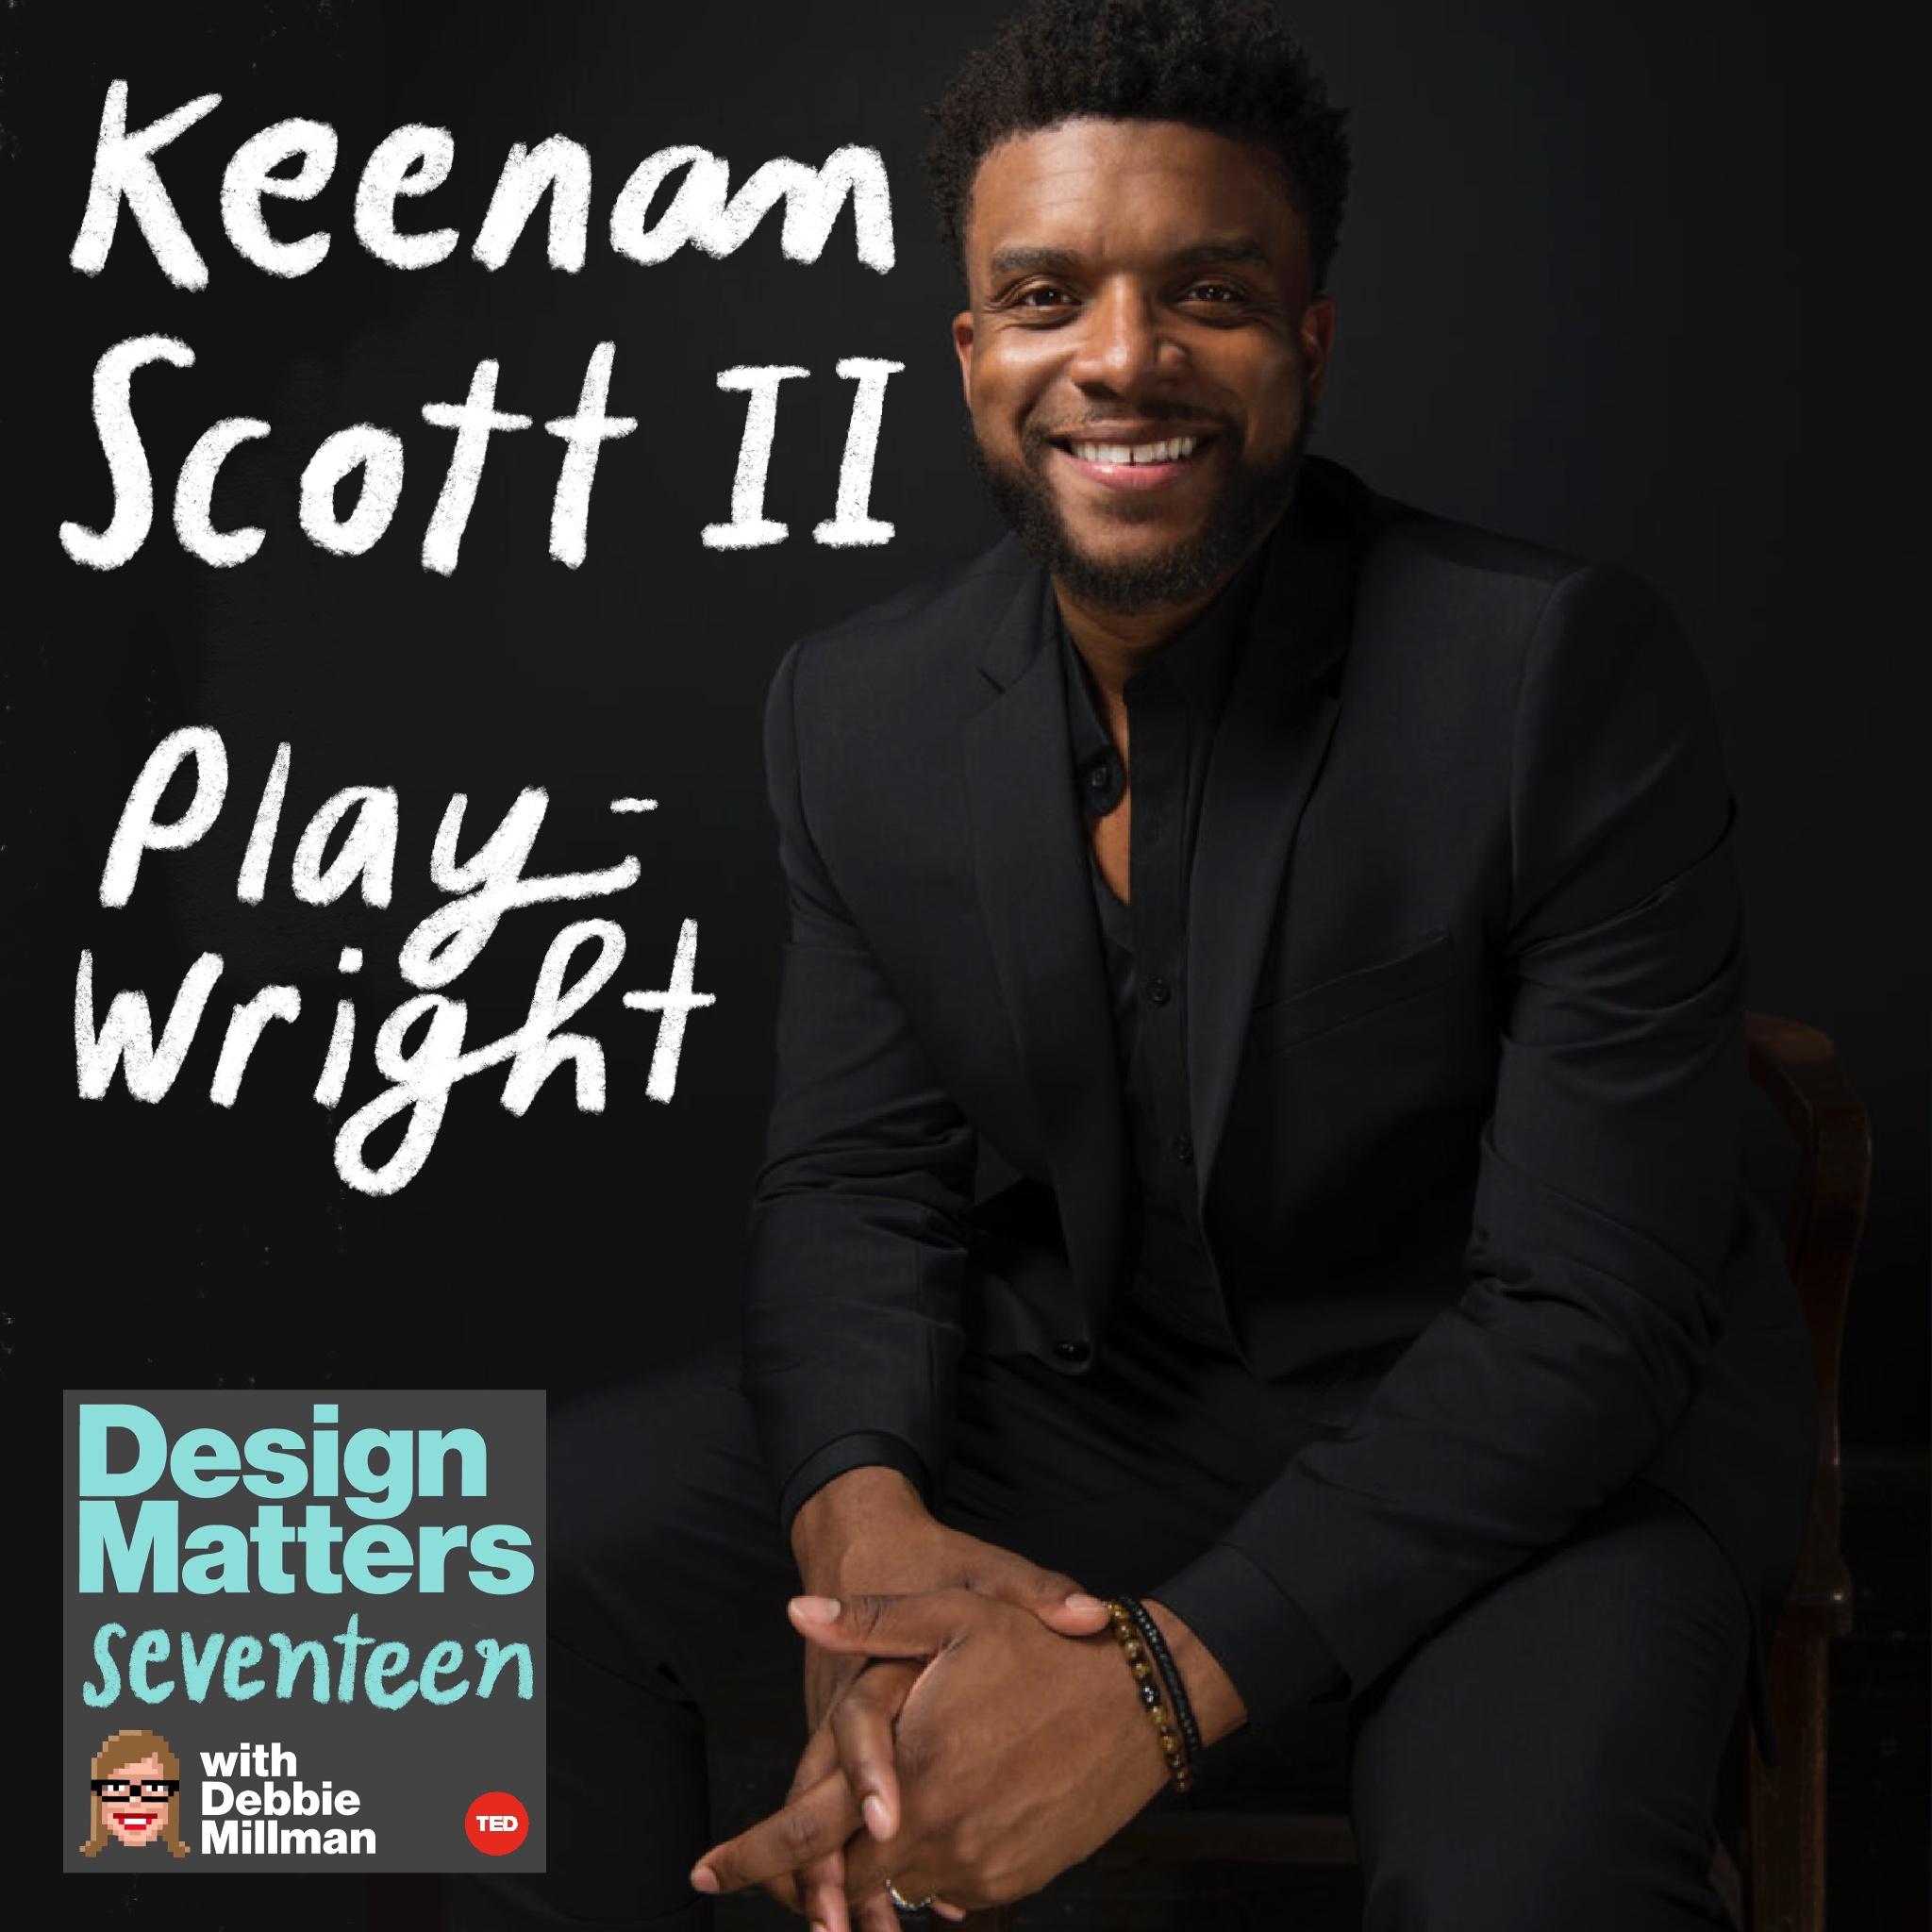 Thumbnail for "Keenan Scott II".